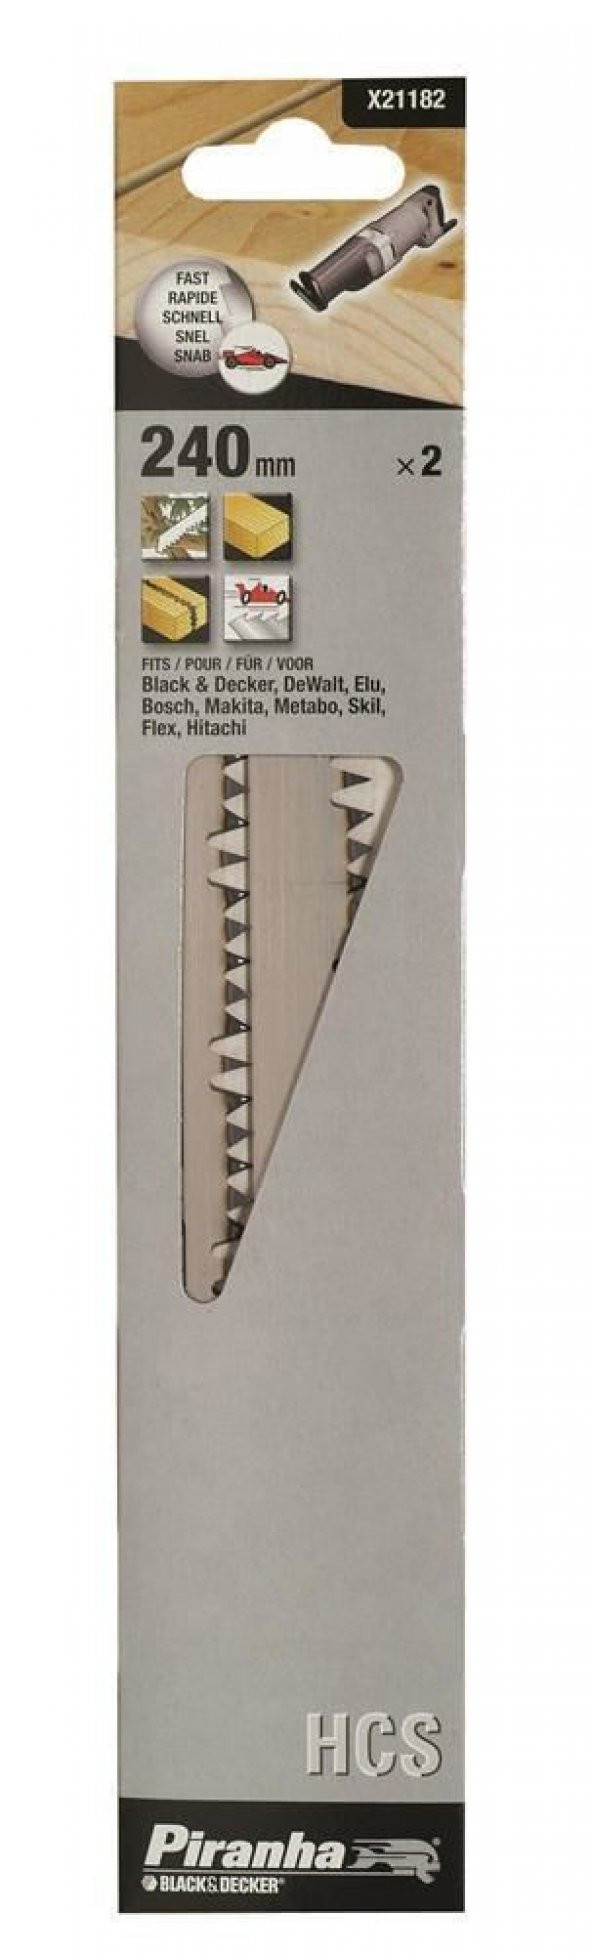 Black&Decker X21182 2 Parça Tilki Kuyruğu Testere Bıçağı